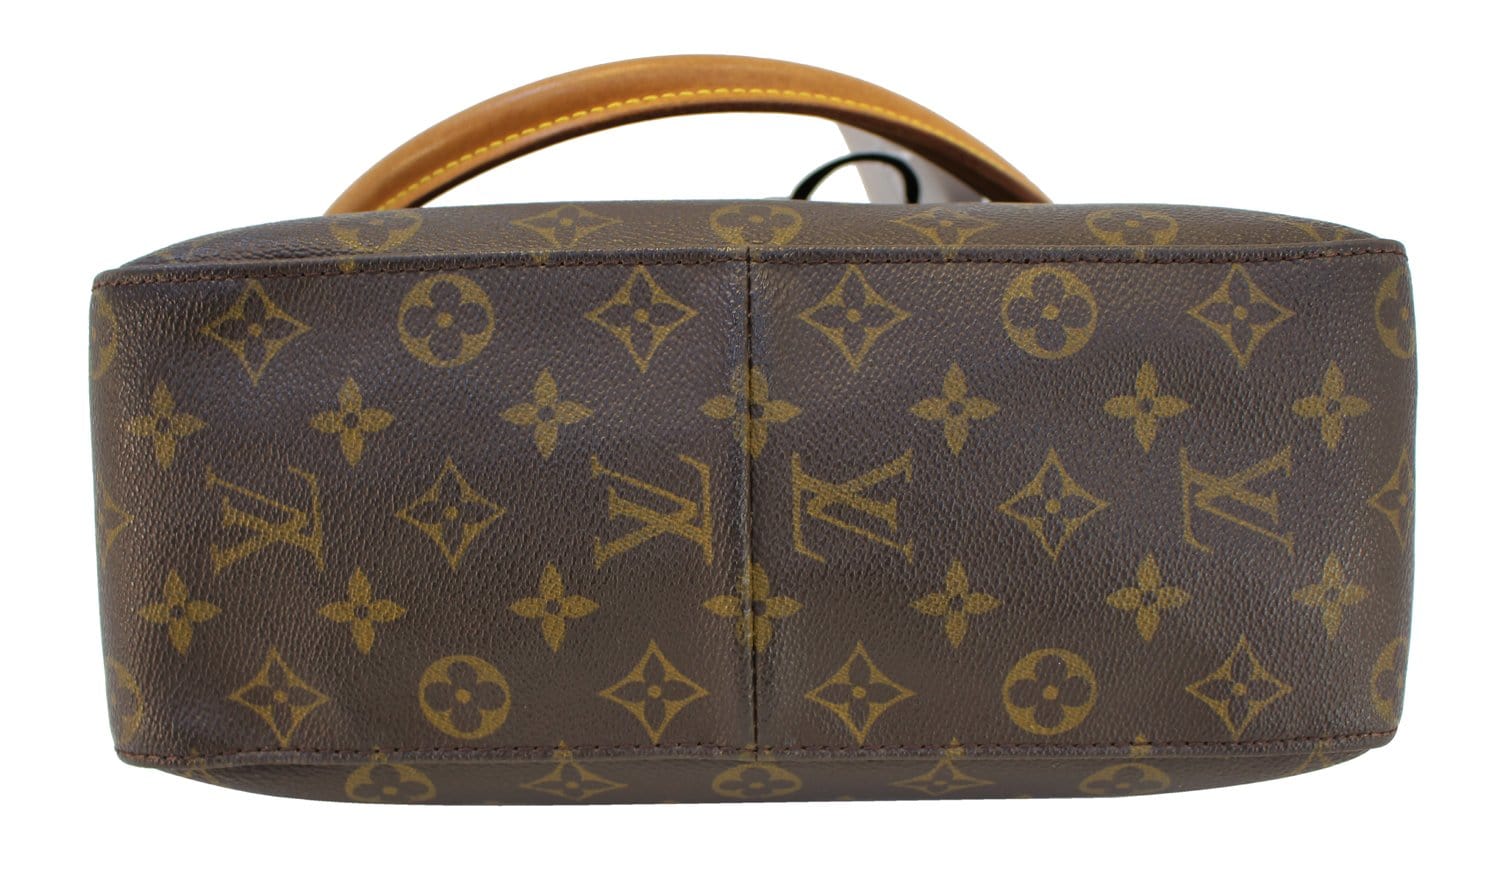 Sold at Auction: Louis Vuitton, LOUIS VUITTON Shoulder Bag LOOPING.